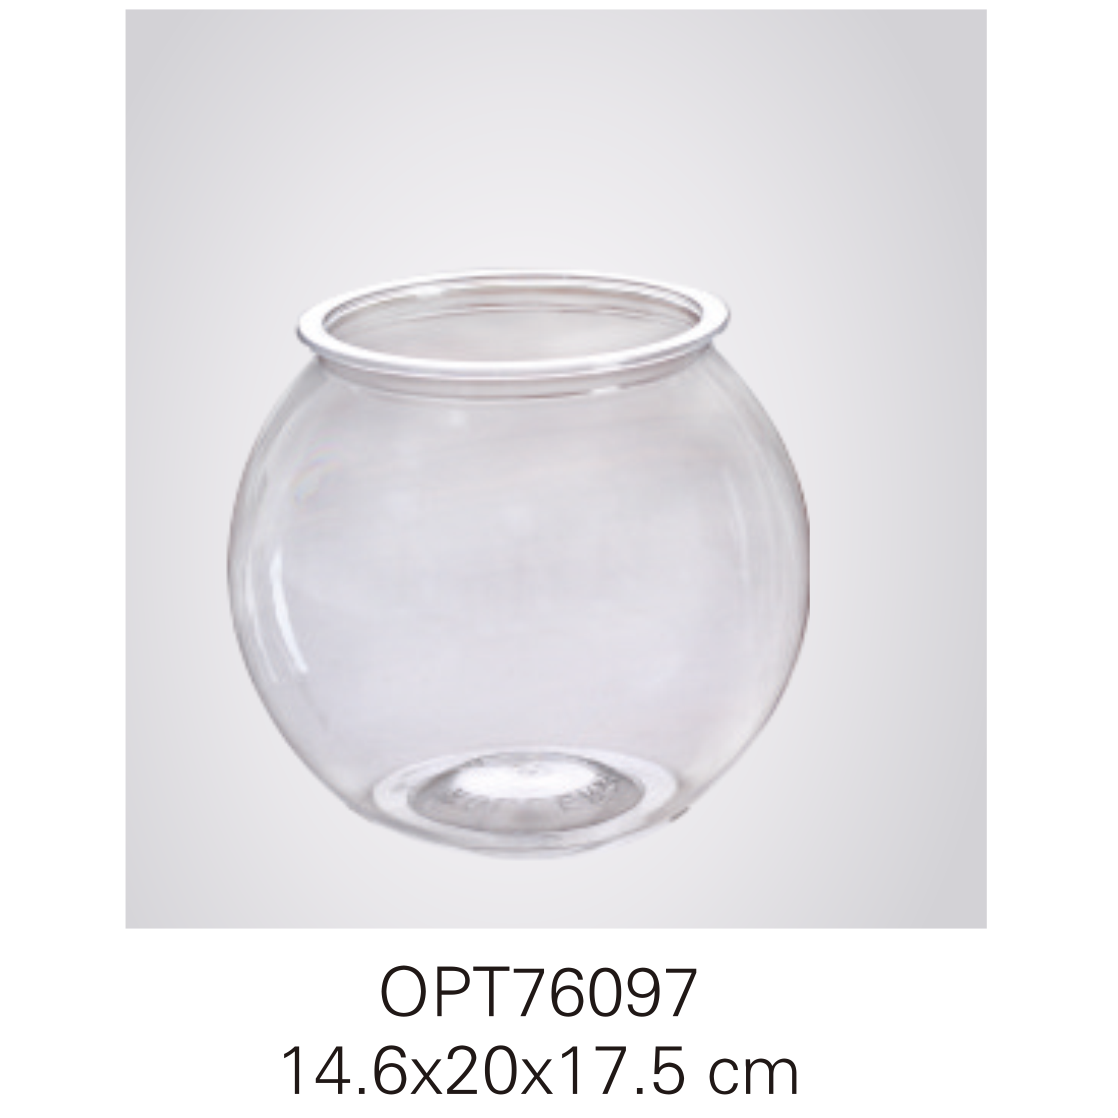 OPT76097 14.6x20x17.5cm fishbowls